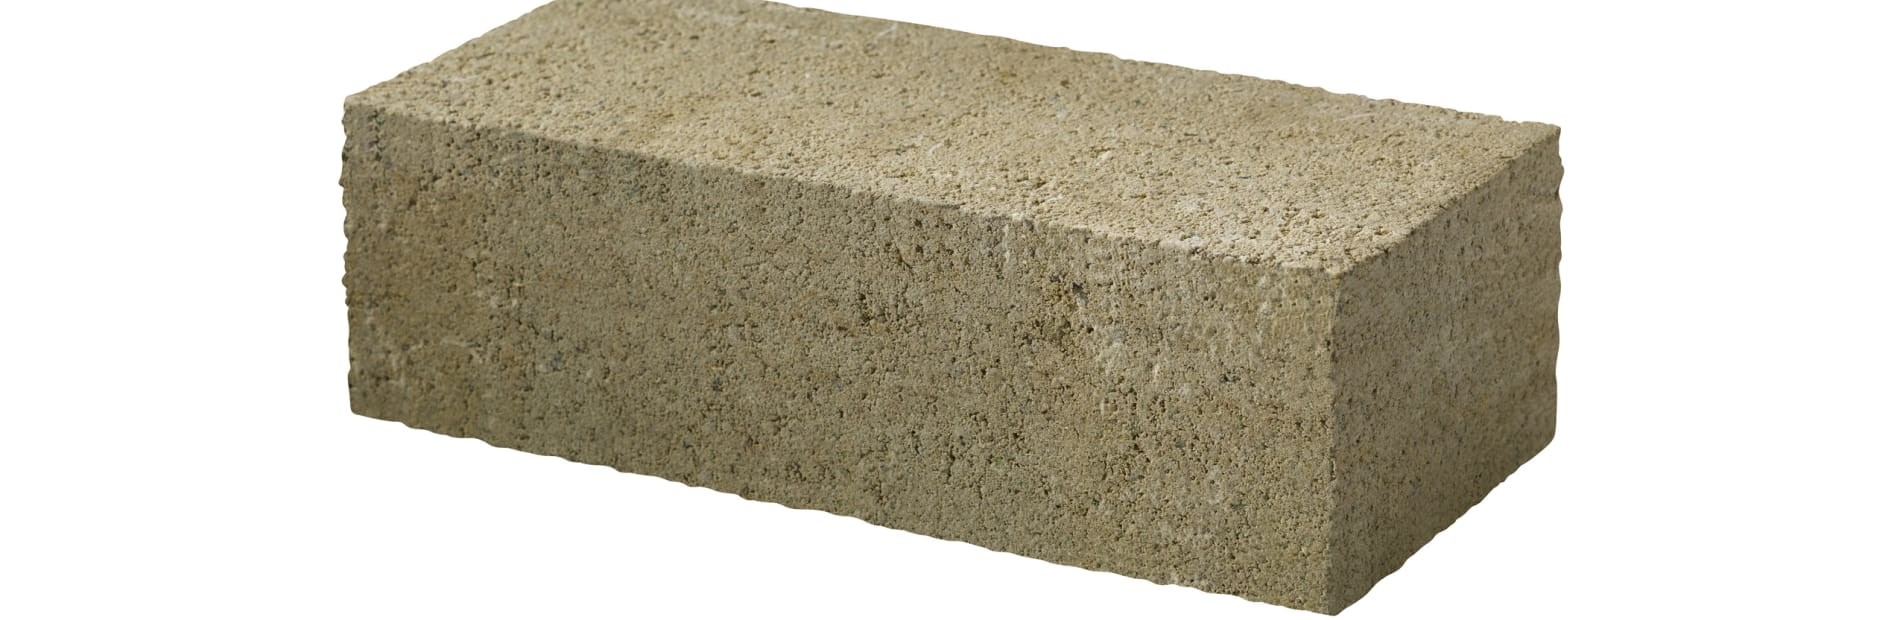 Marshalls 73mm Concrete Common Brick                               